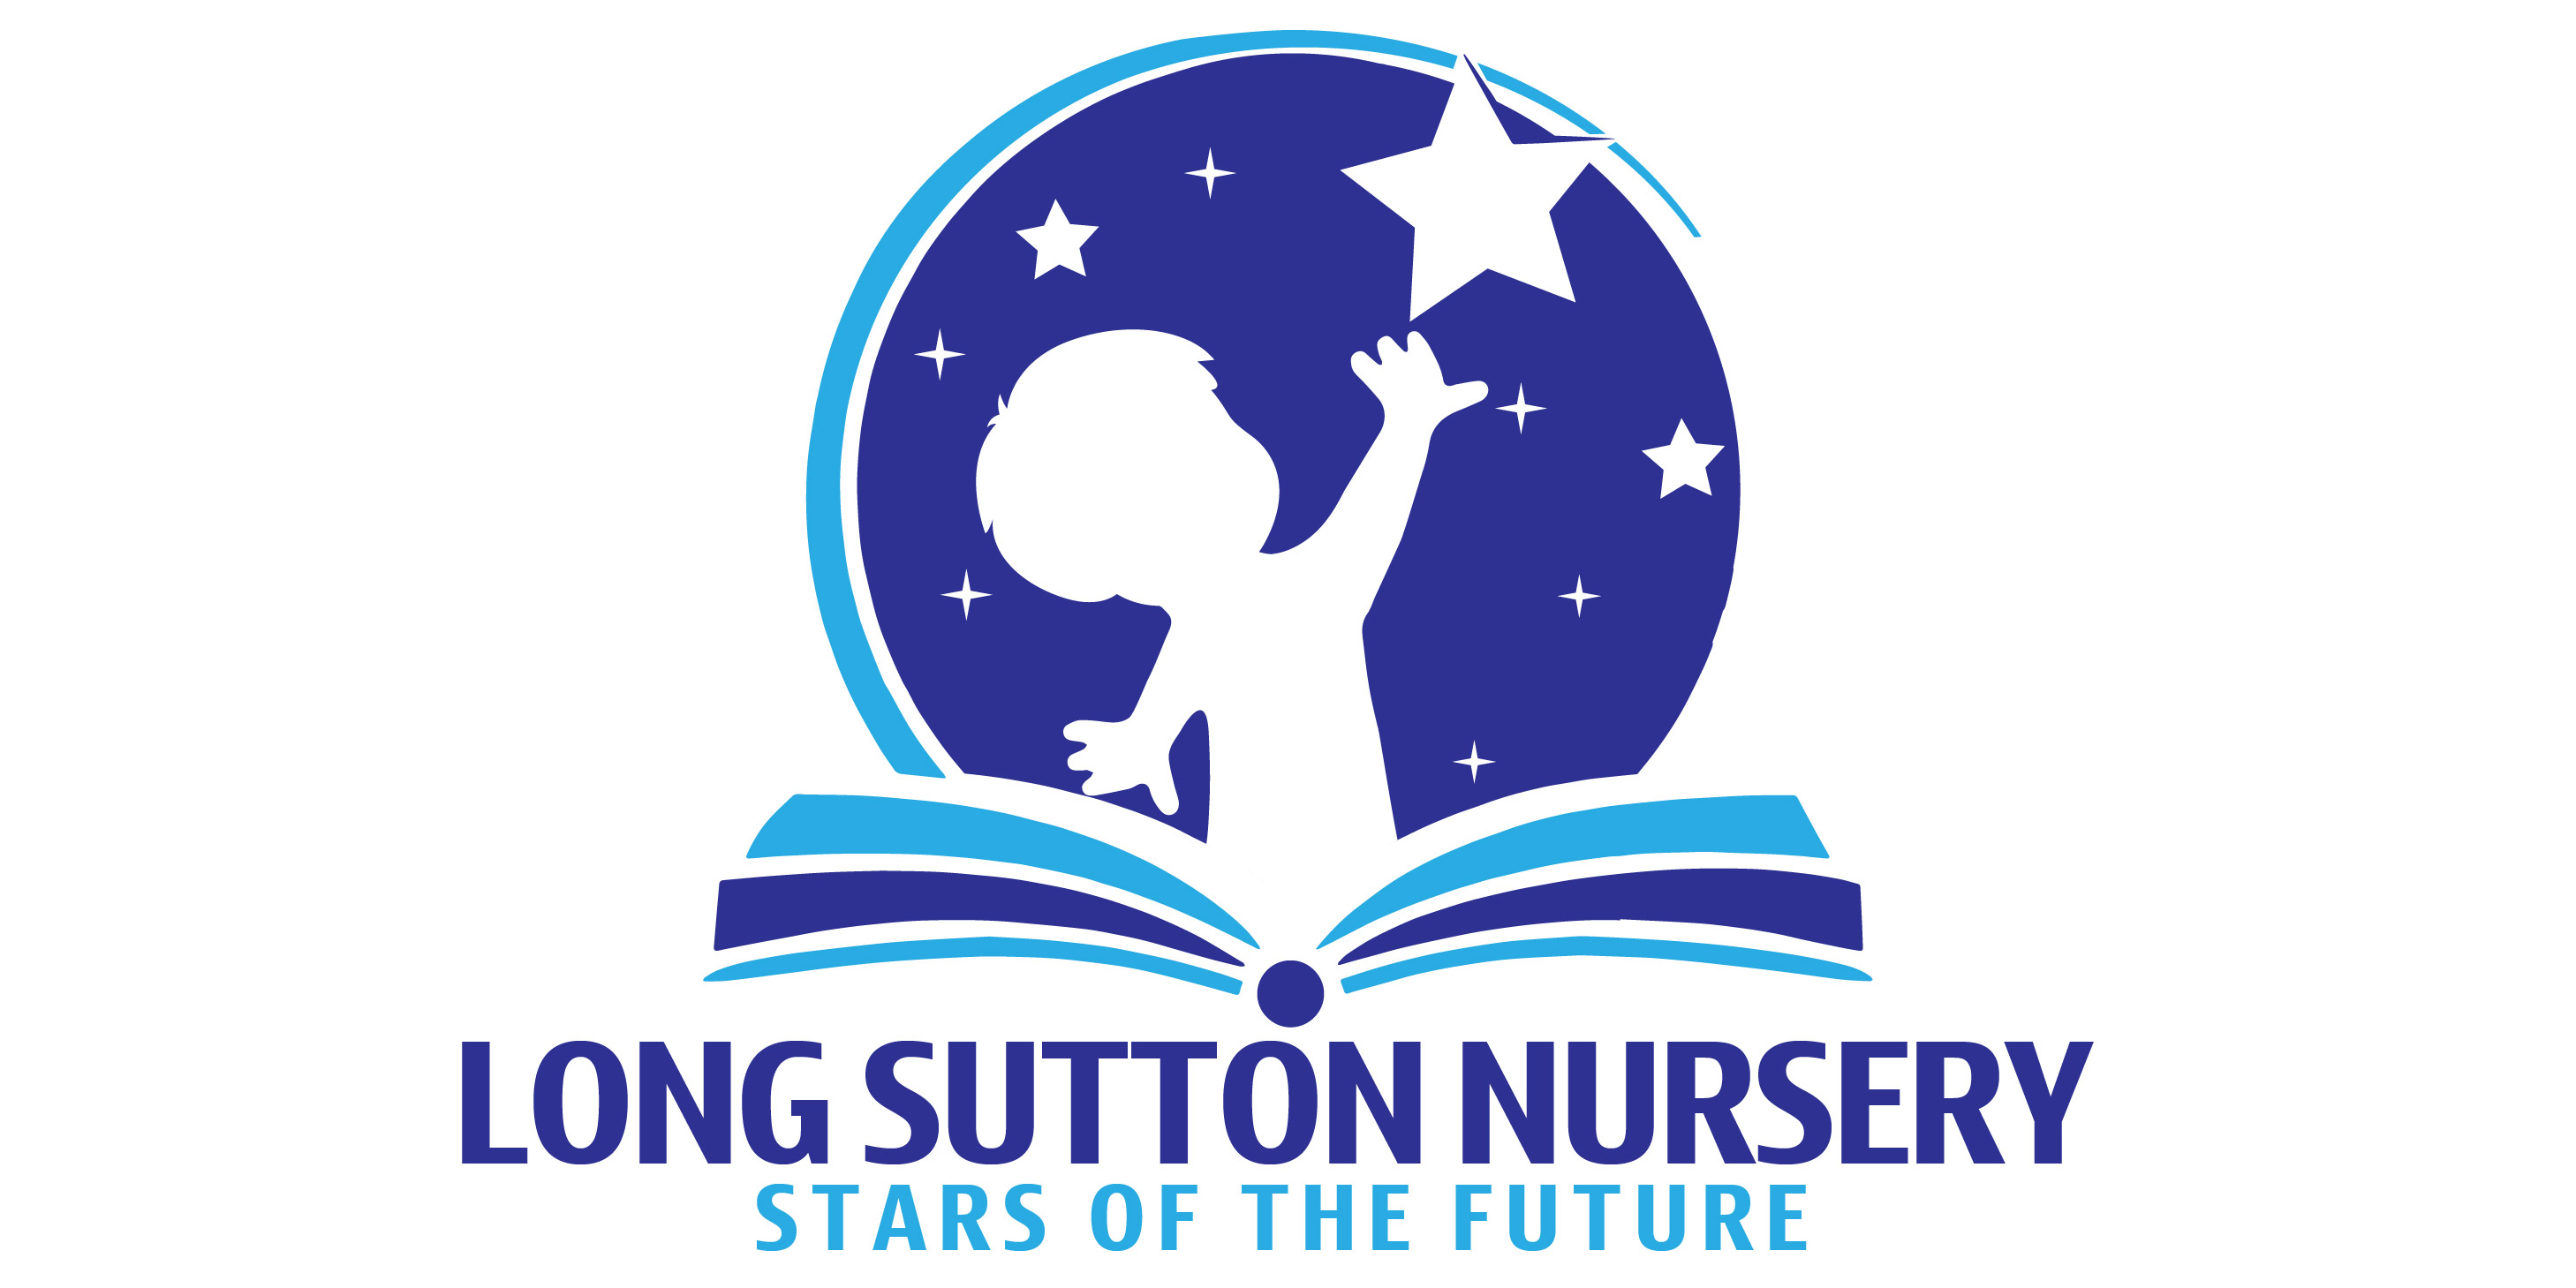 Long Sutton Nursery - Stars of the Future